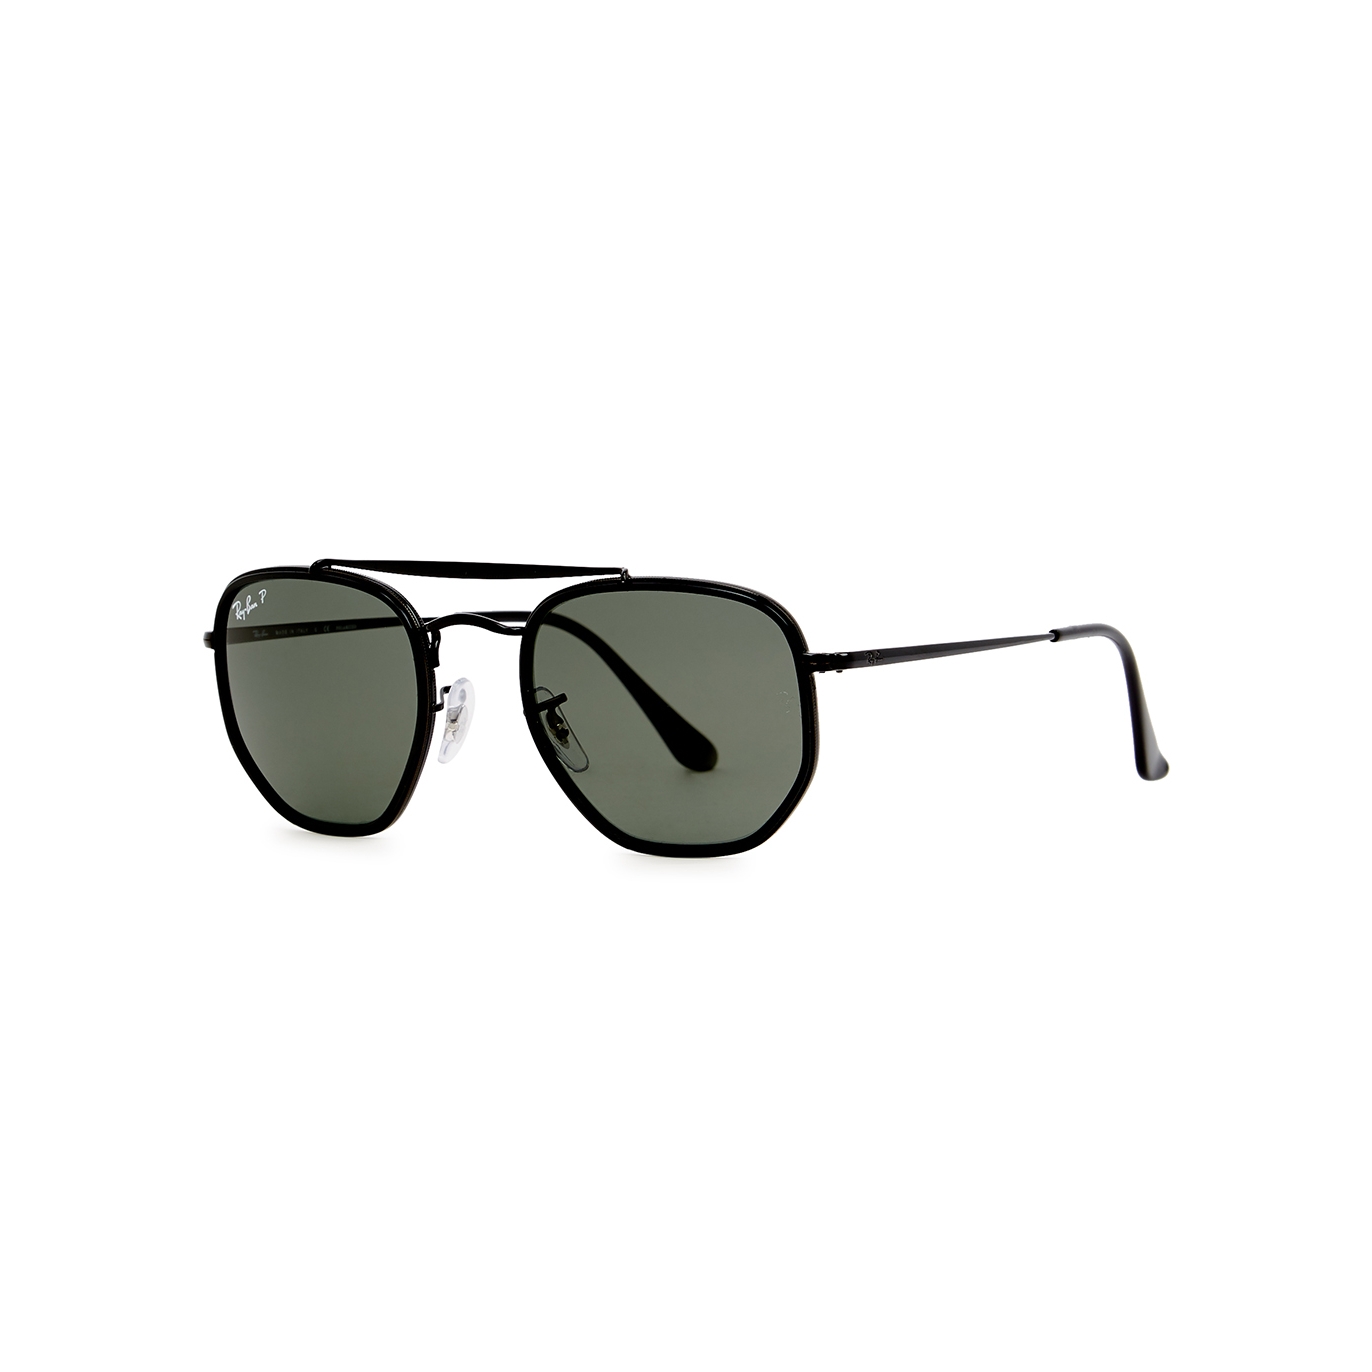 Ray-Ban The Marshal II Polarised Aviator Sunglasses, Sunglasses, Black